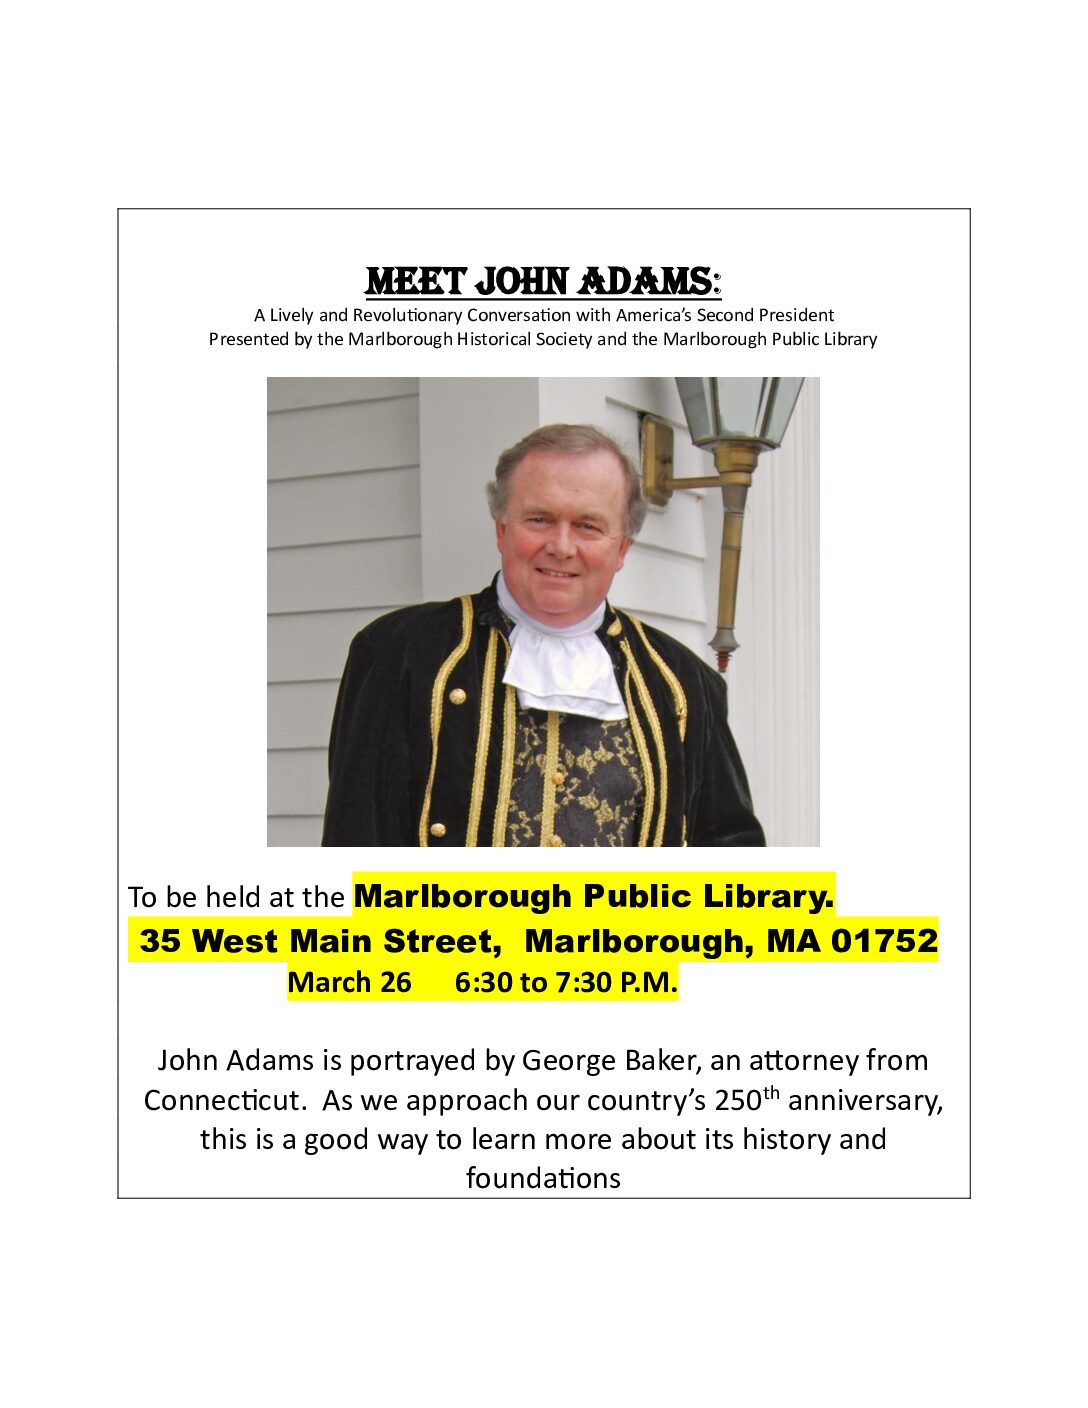 Meet John Adams @ the Marlborough Public Library